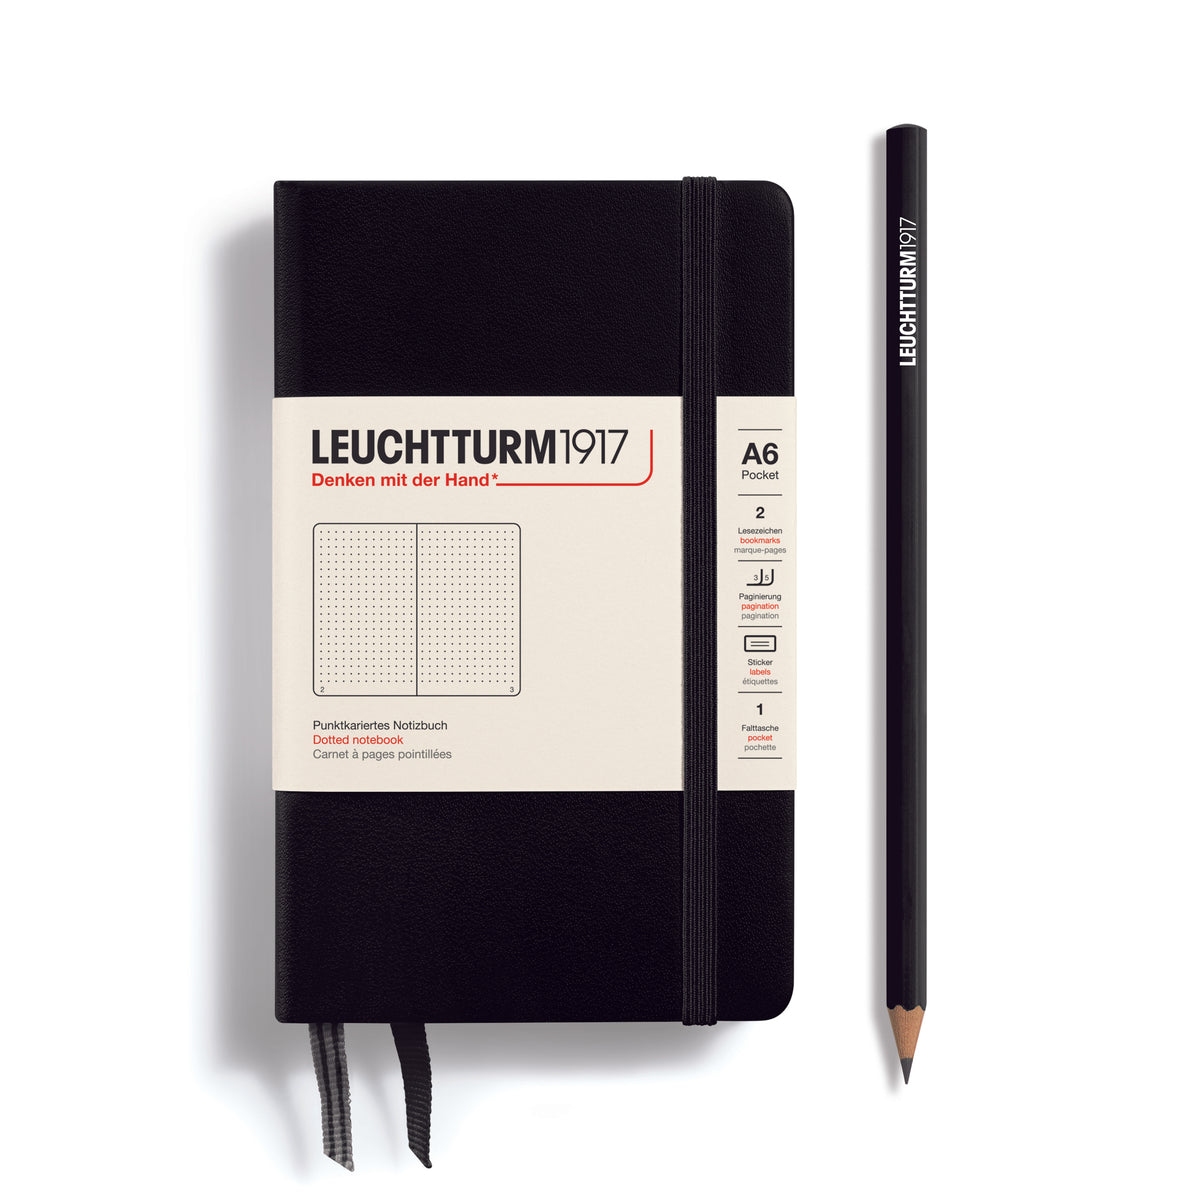 Leuchtturm1917 Notebook A6 Pocket Hardcover in black - Penny Black - dotted ruling